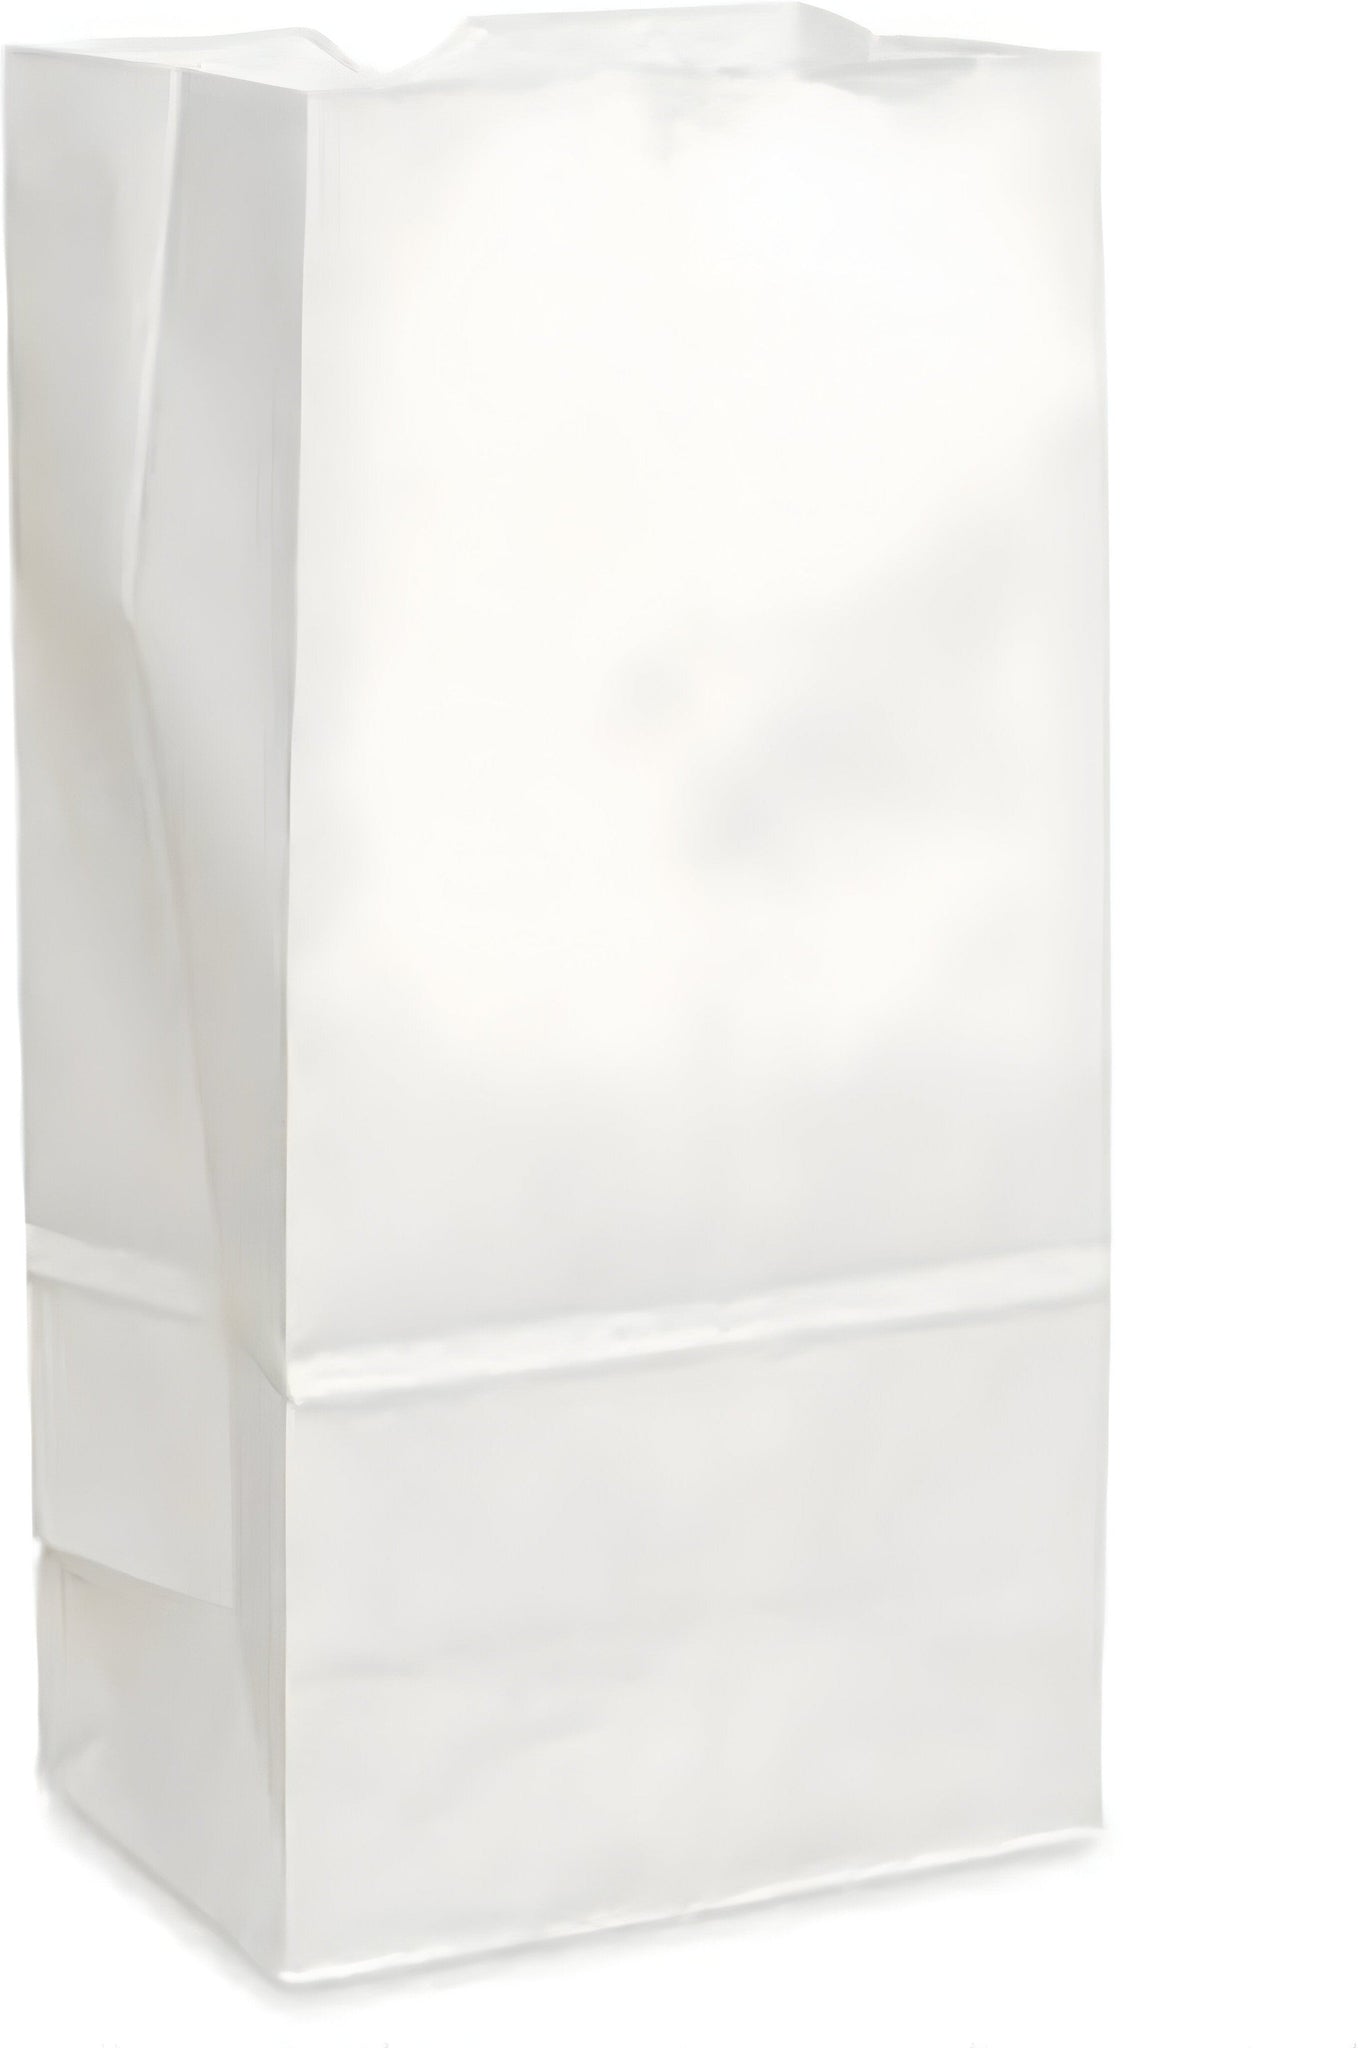 Atlas Paper Bag - 8 lb White Paper Bags, 500/Bn - 4080006